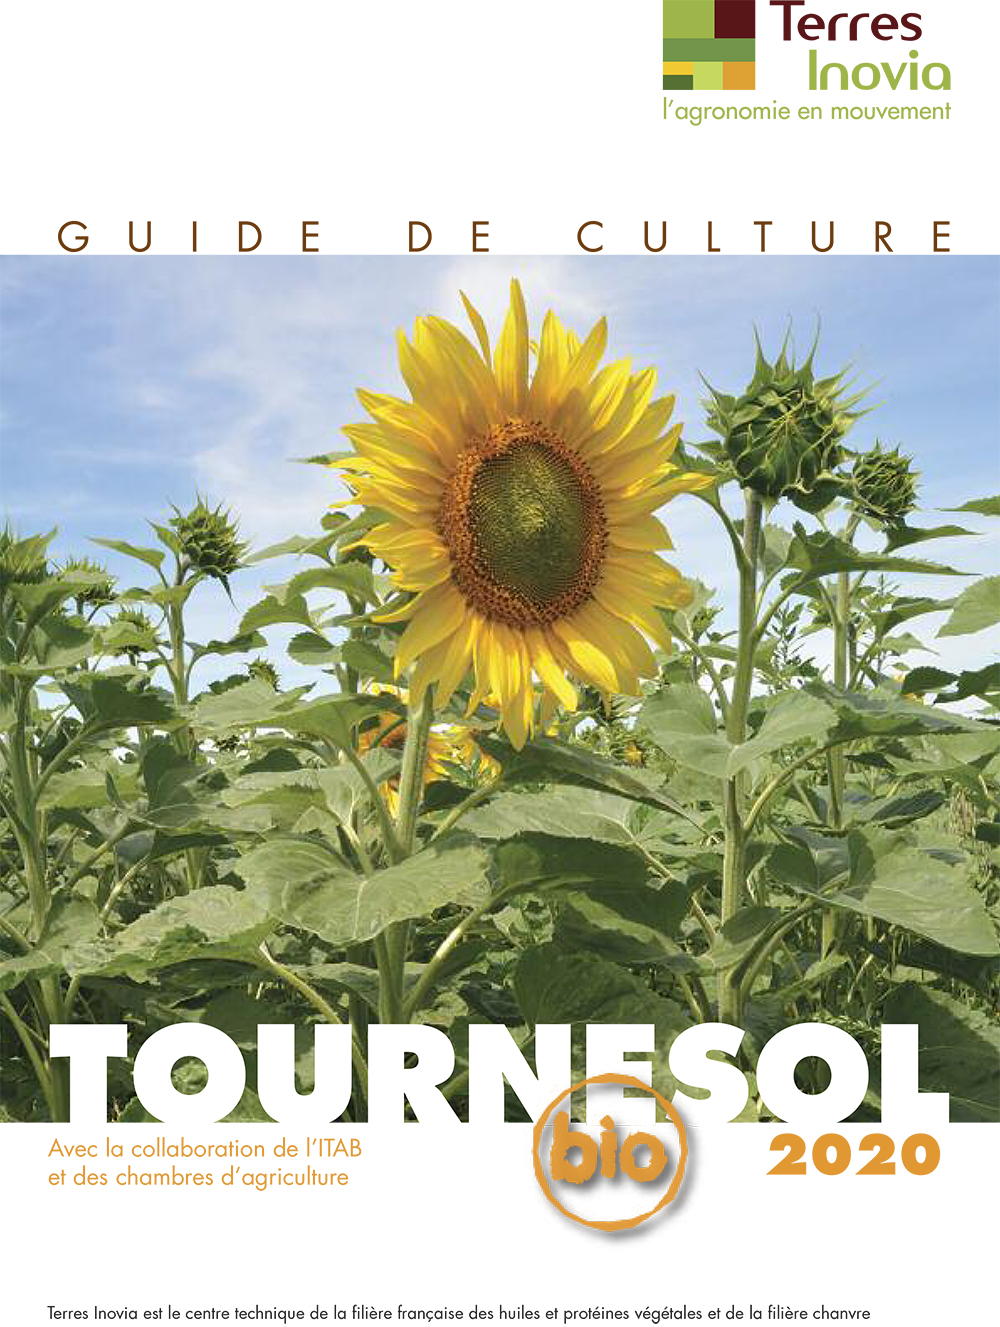 Le guide de culture Tournesol bio par Terres Inovia